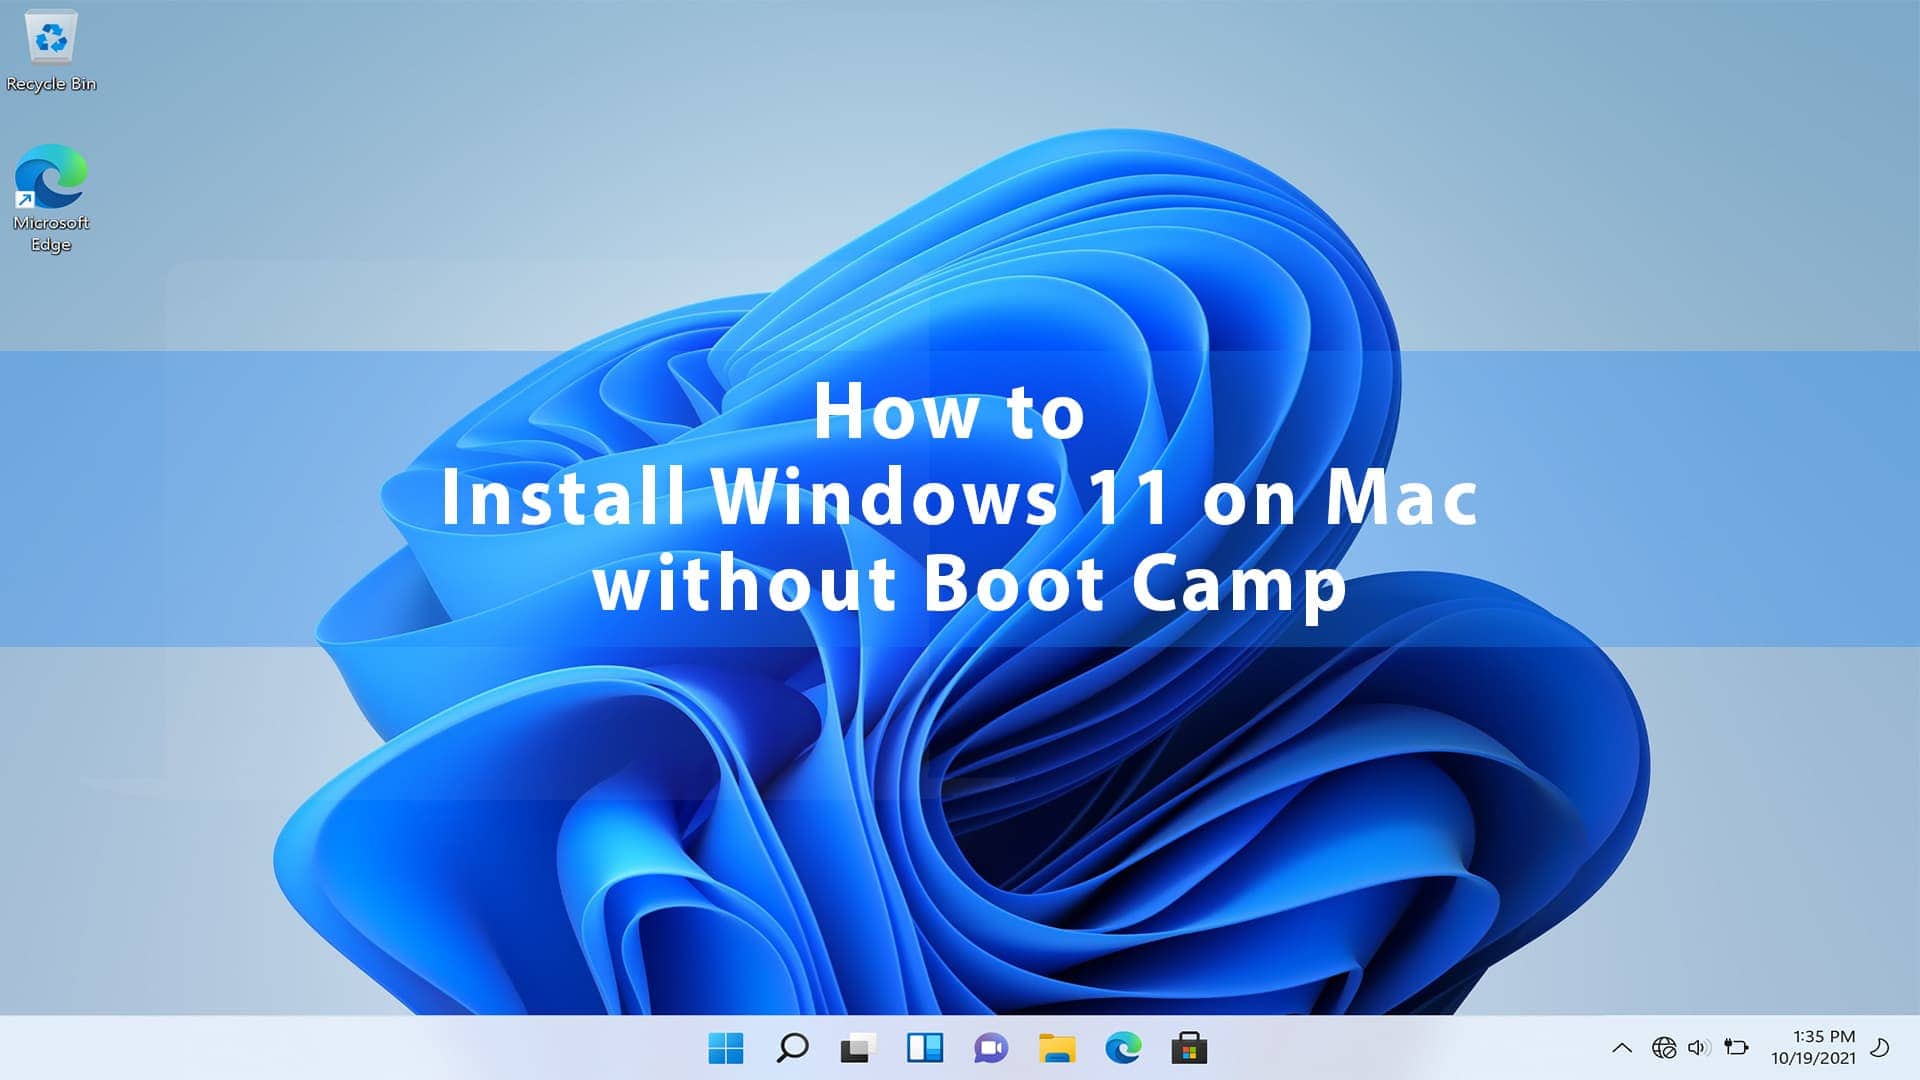 bootcamp drivers for windows 10 mac